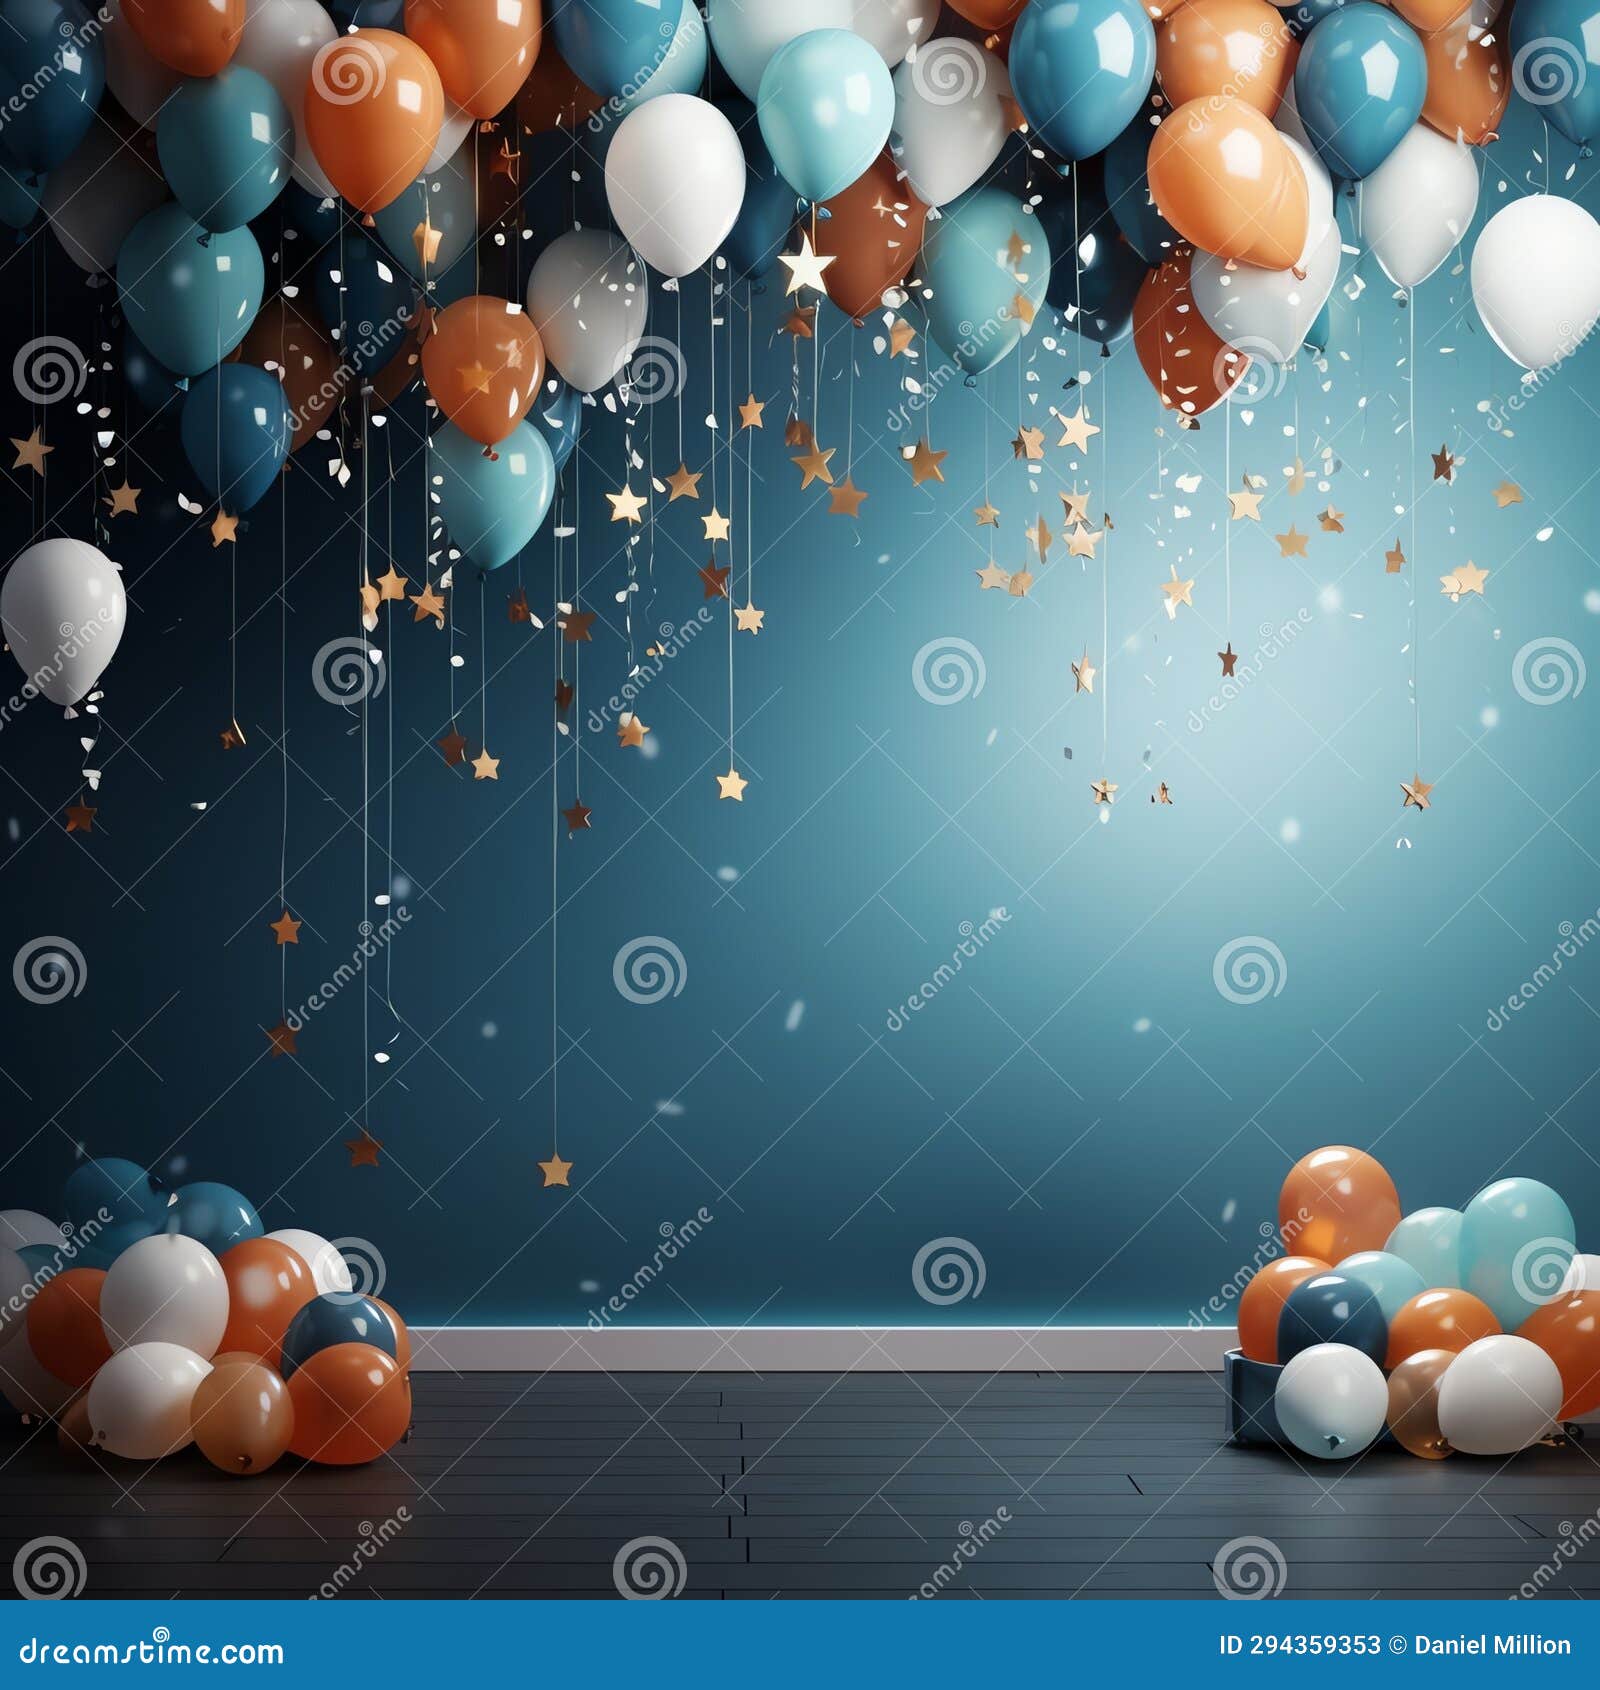 Balloon Drop New Year Celebration Background Stock Illustration